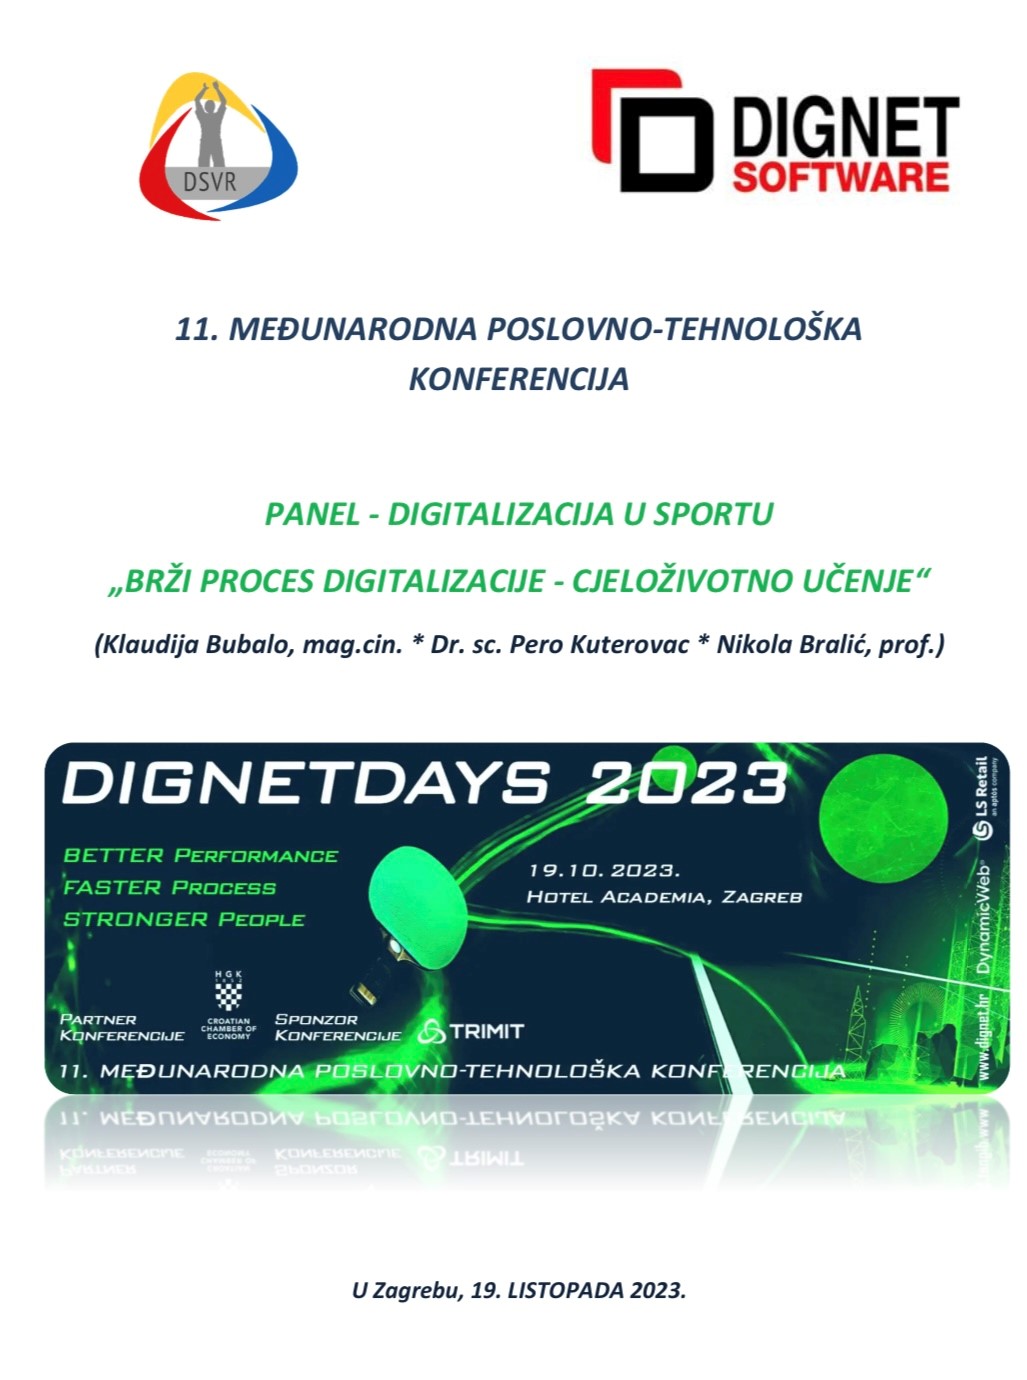 DSVR PARTNER PANELA DIGITALIZACIJA U SPORTU - DIGNETDAYS 2023.